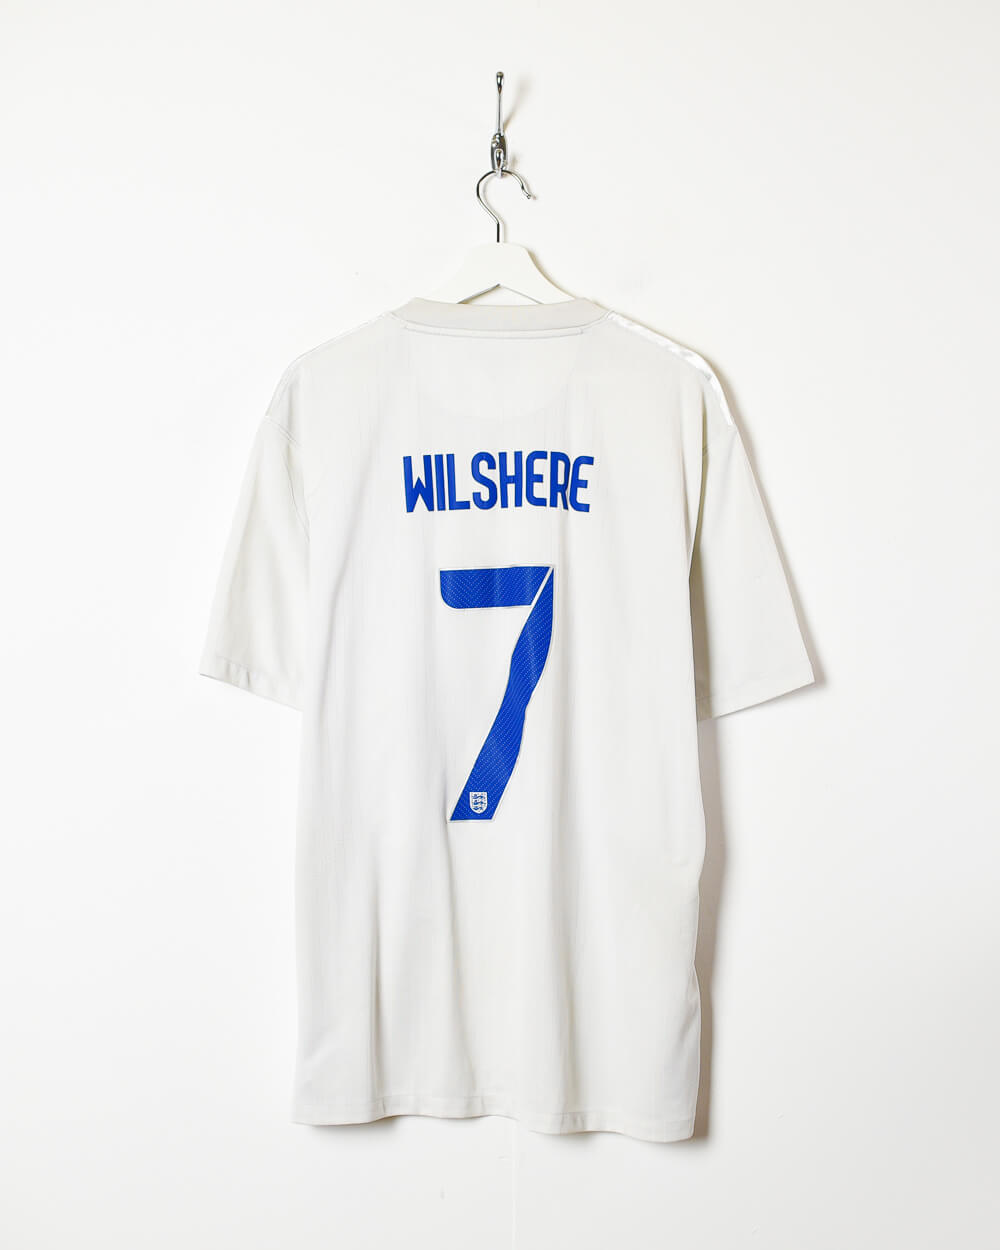 Stone Nike 2014 England Wilshire 7 Home Shirt - XX-Large